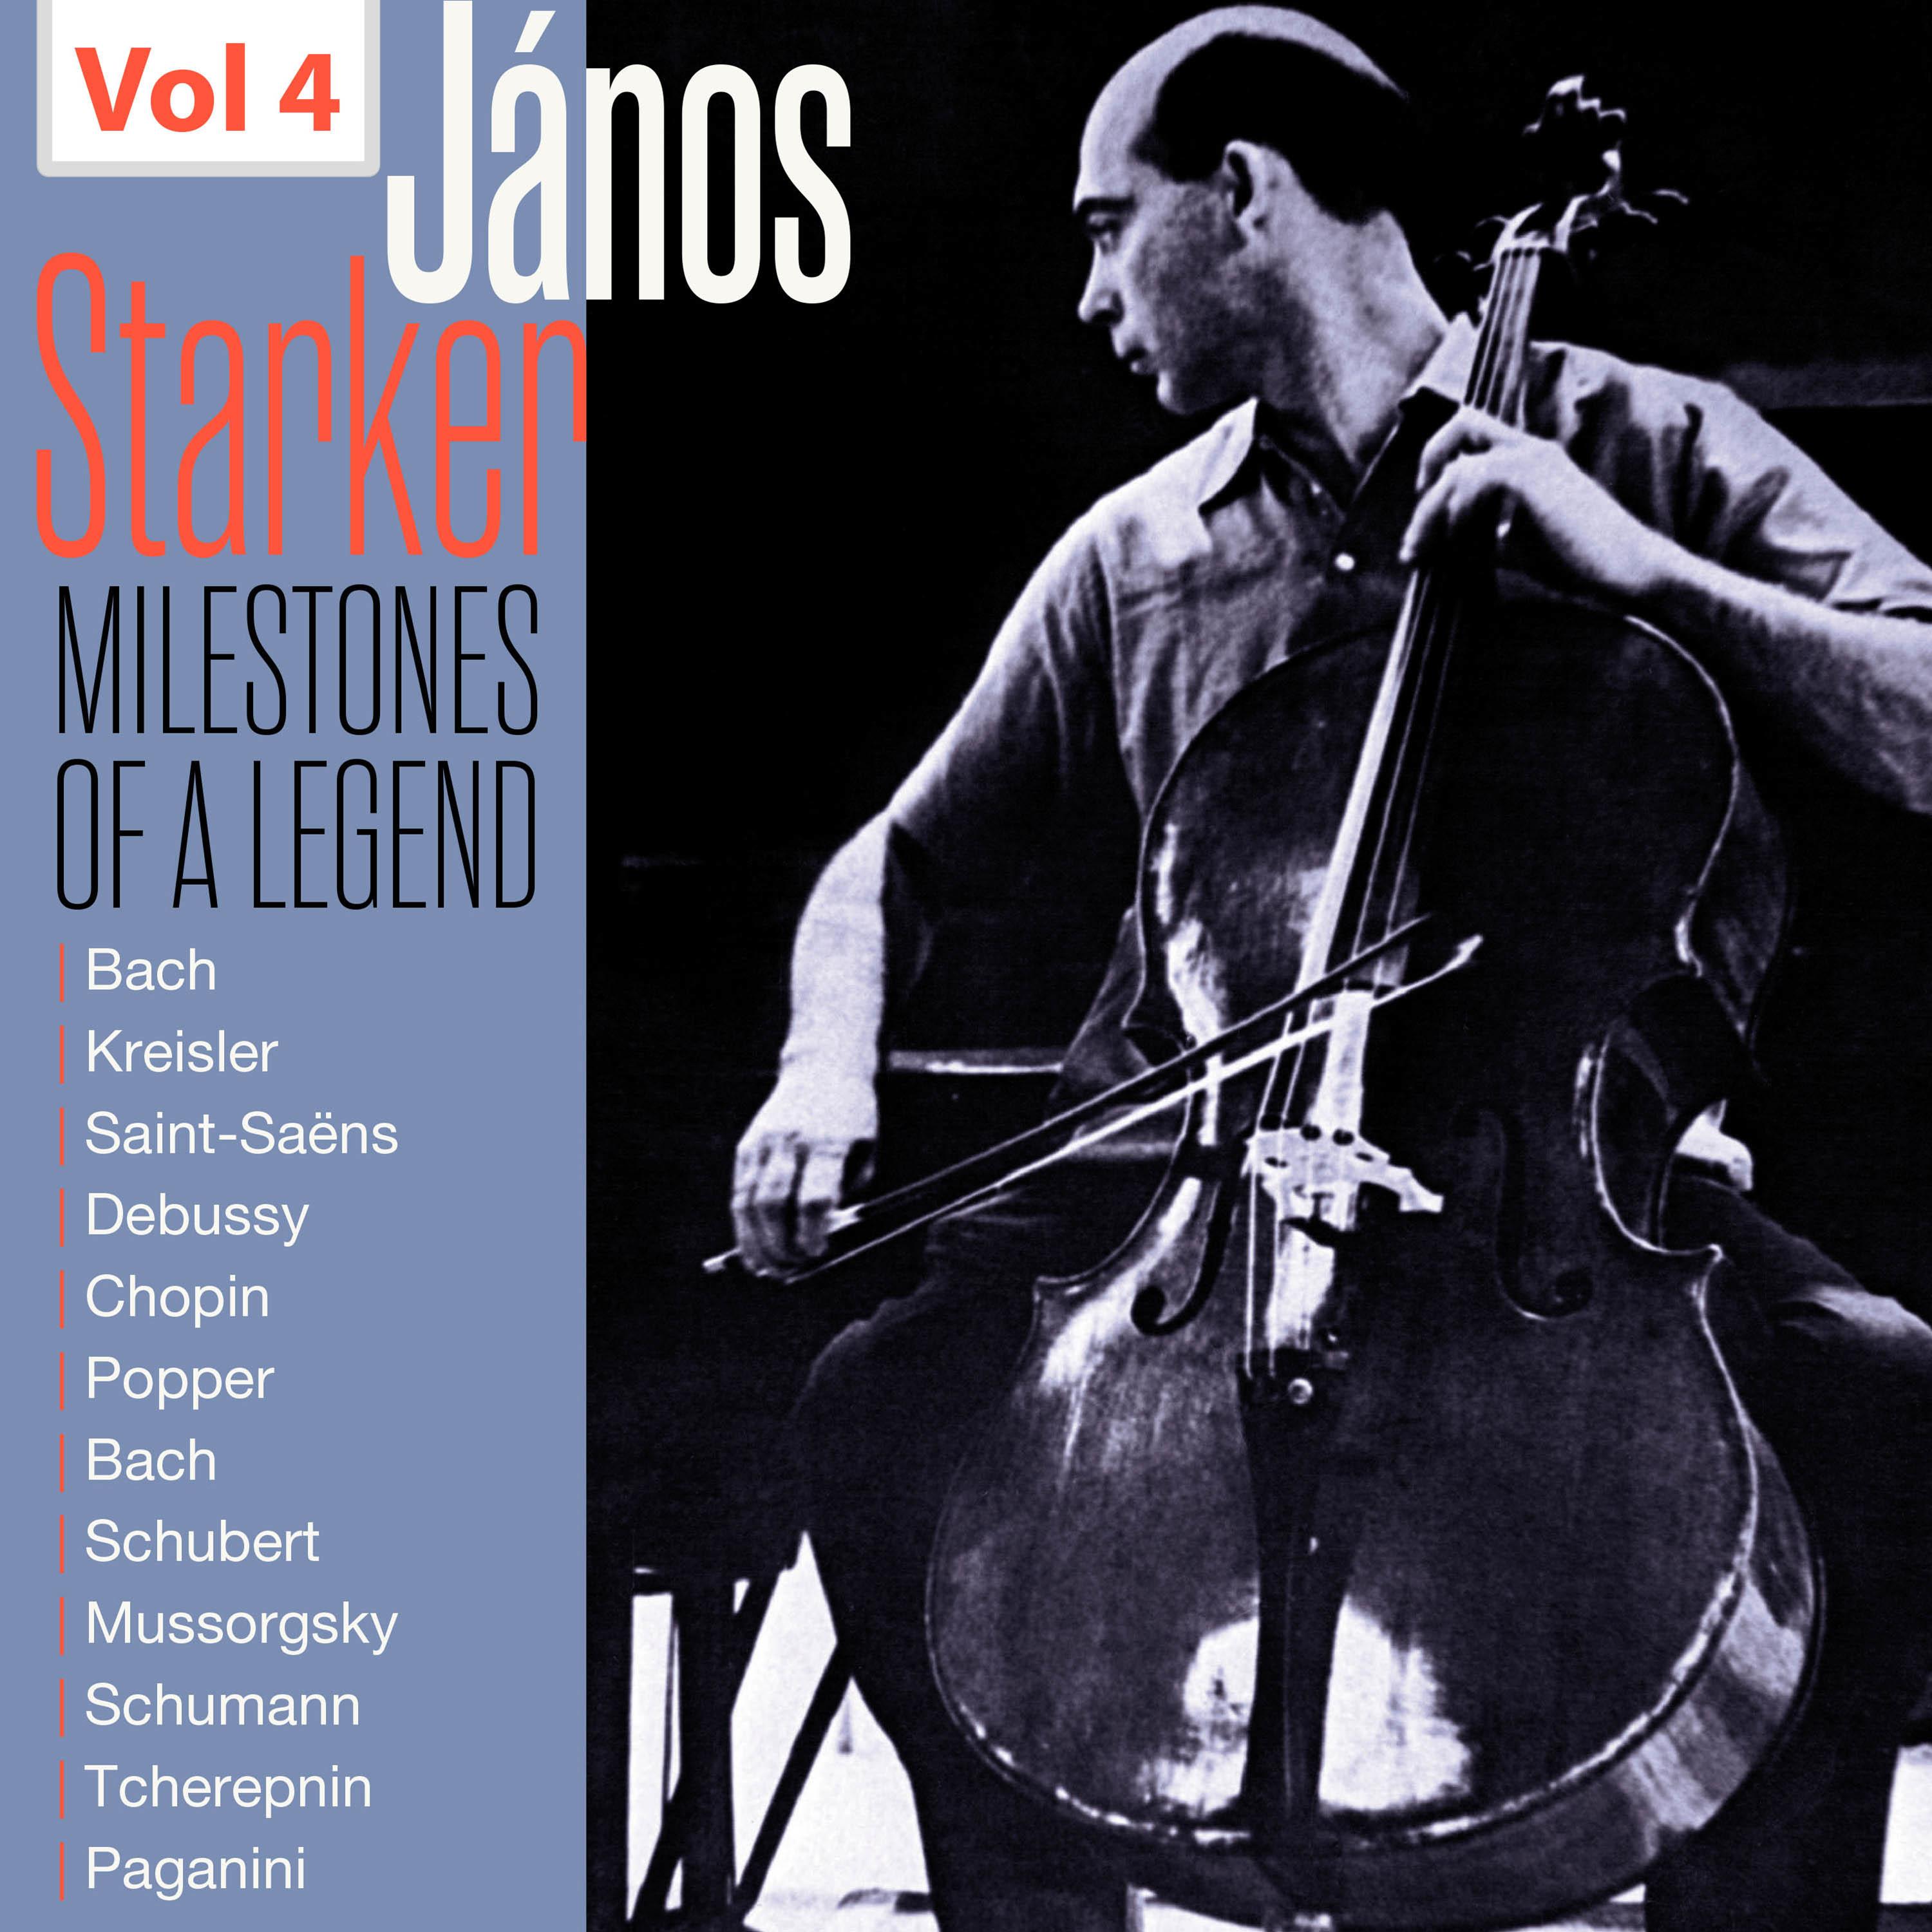 Milestones of a Legend - Janos Starker, Vol. 4